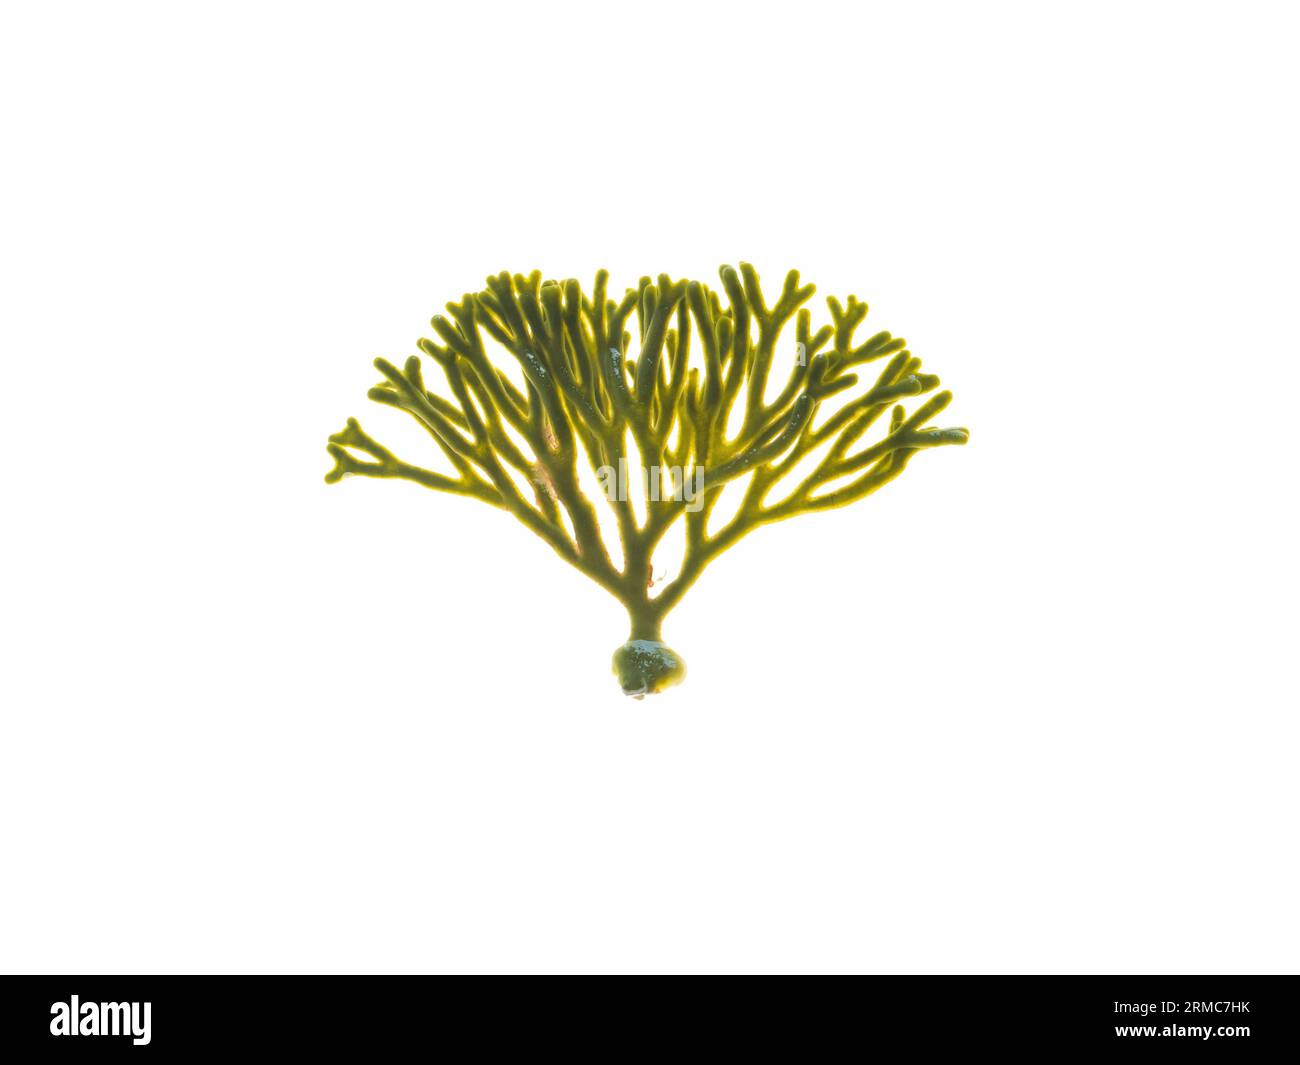 Velvet horn or codium tomentosum seaweed isolated on white.  Spongeweed algae. Stock Photo